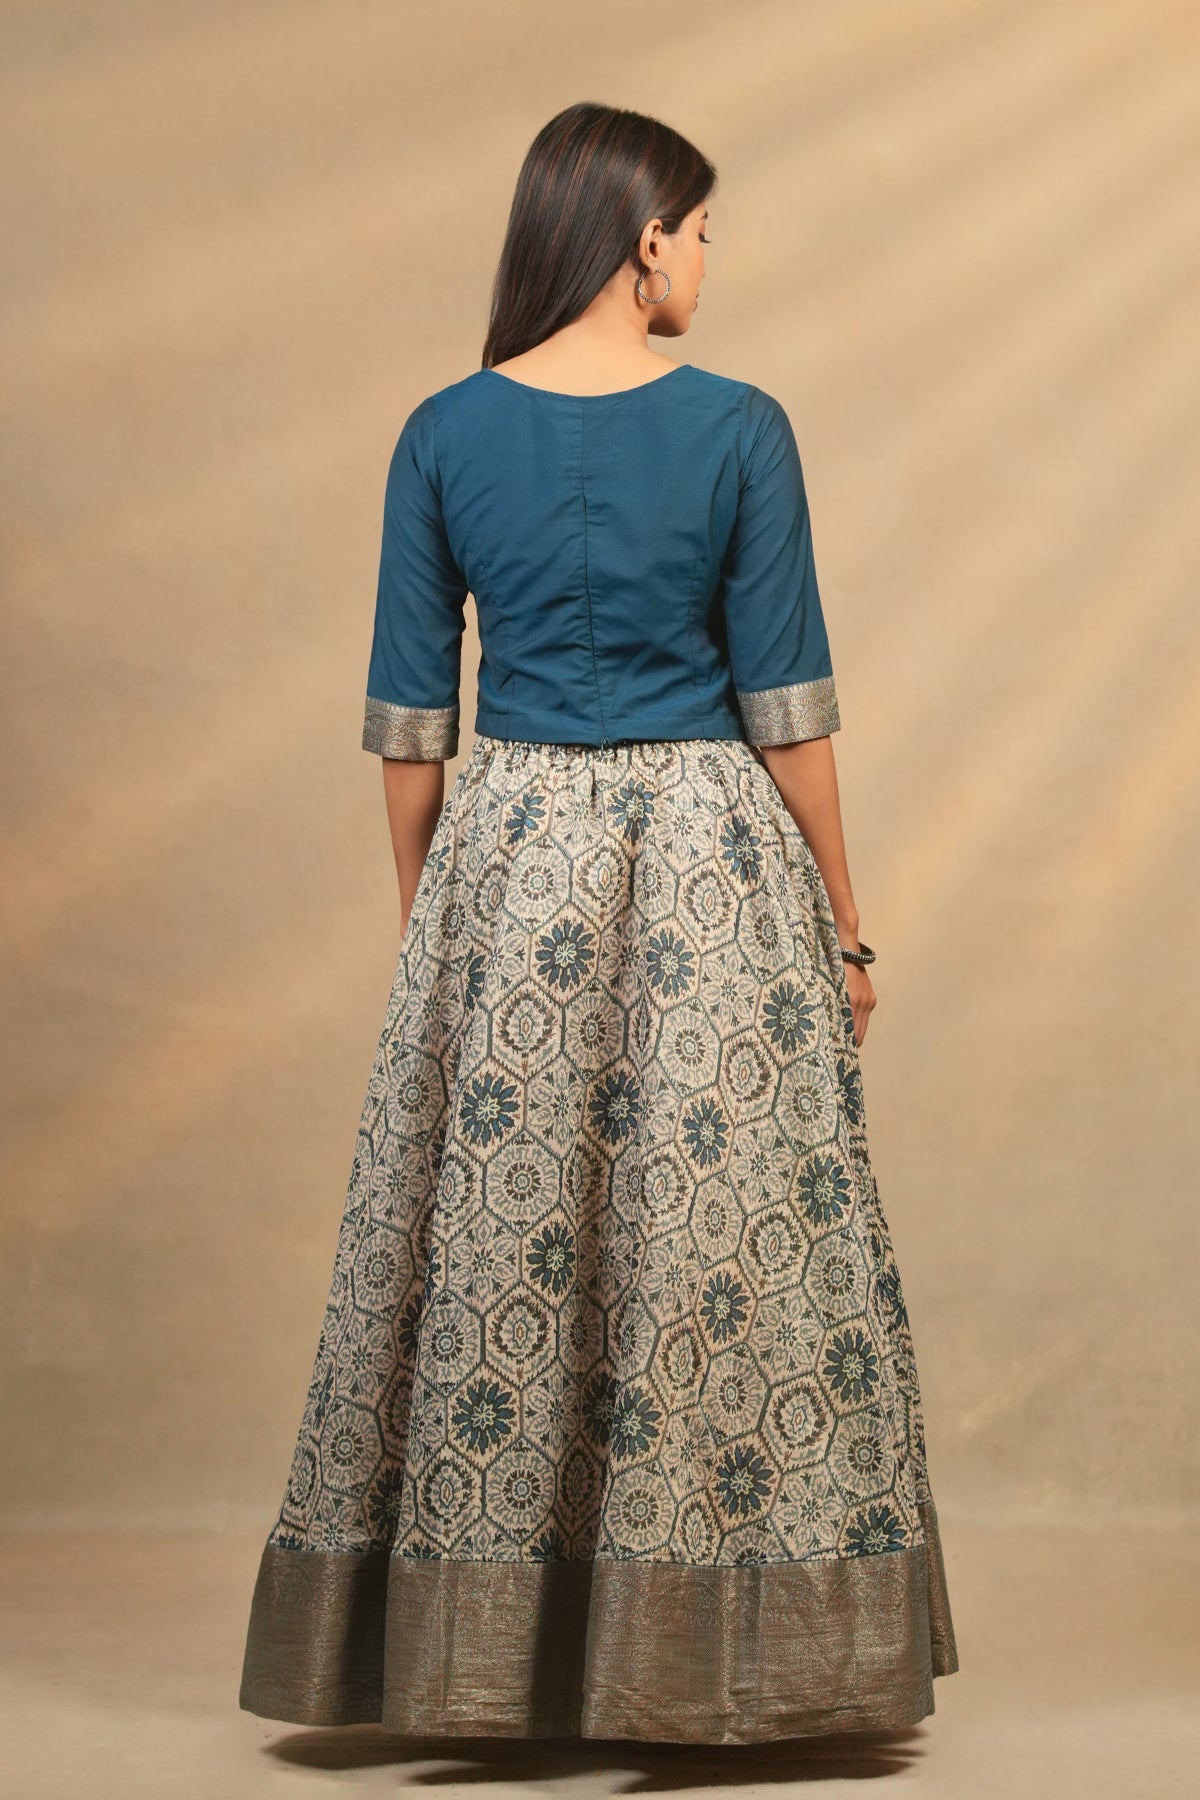 Geometric Embroidered Top & Digital Printed With Zari Border Skirt Set - Blue